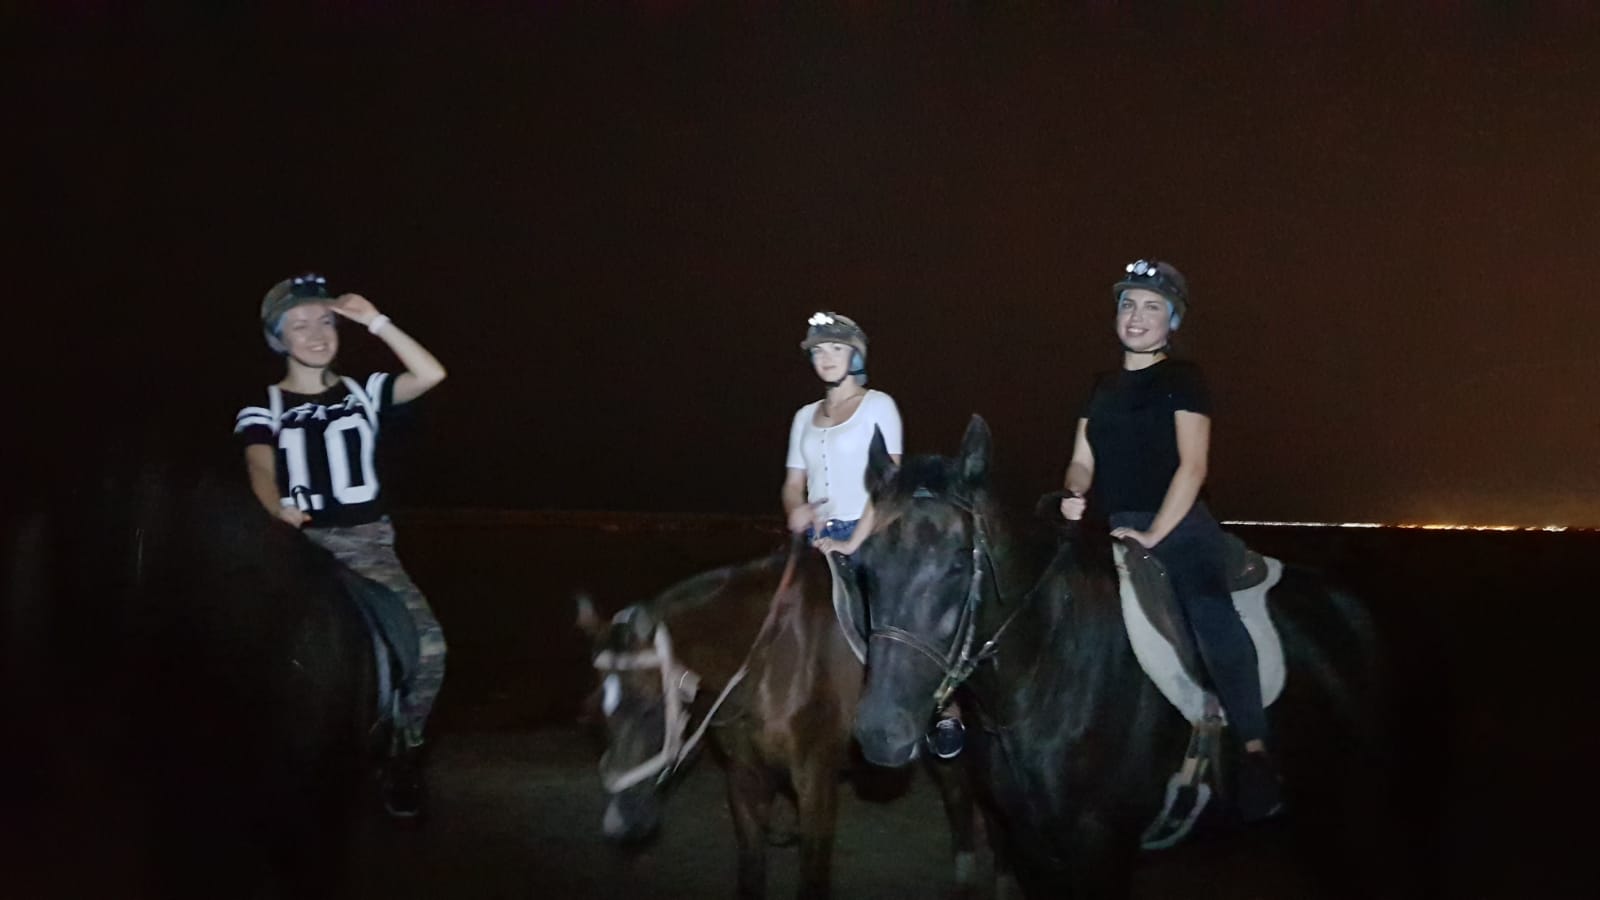 Night Horse riding in Bahrain